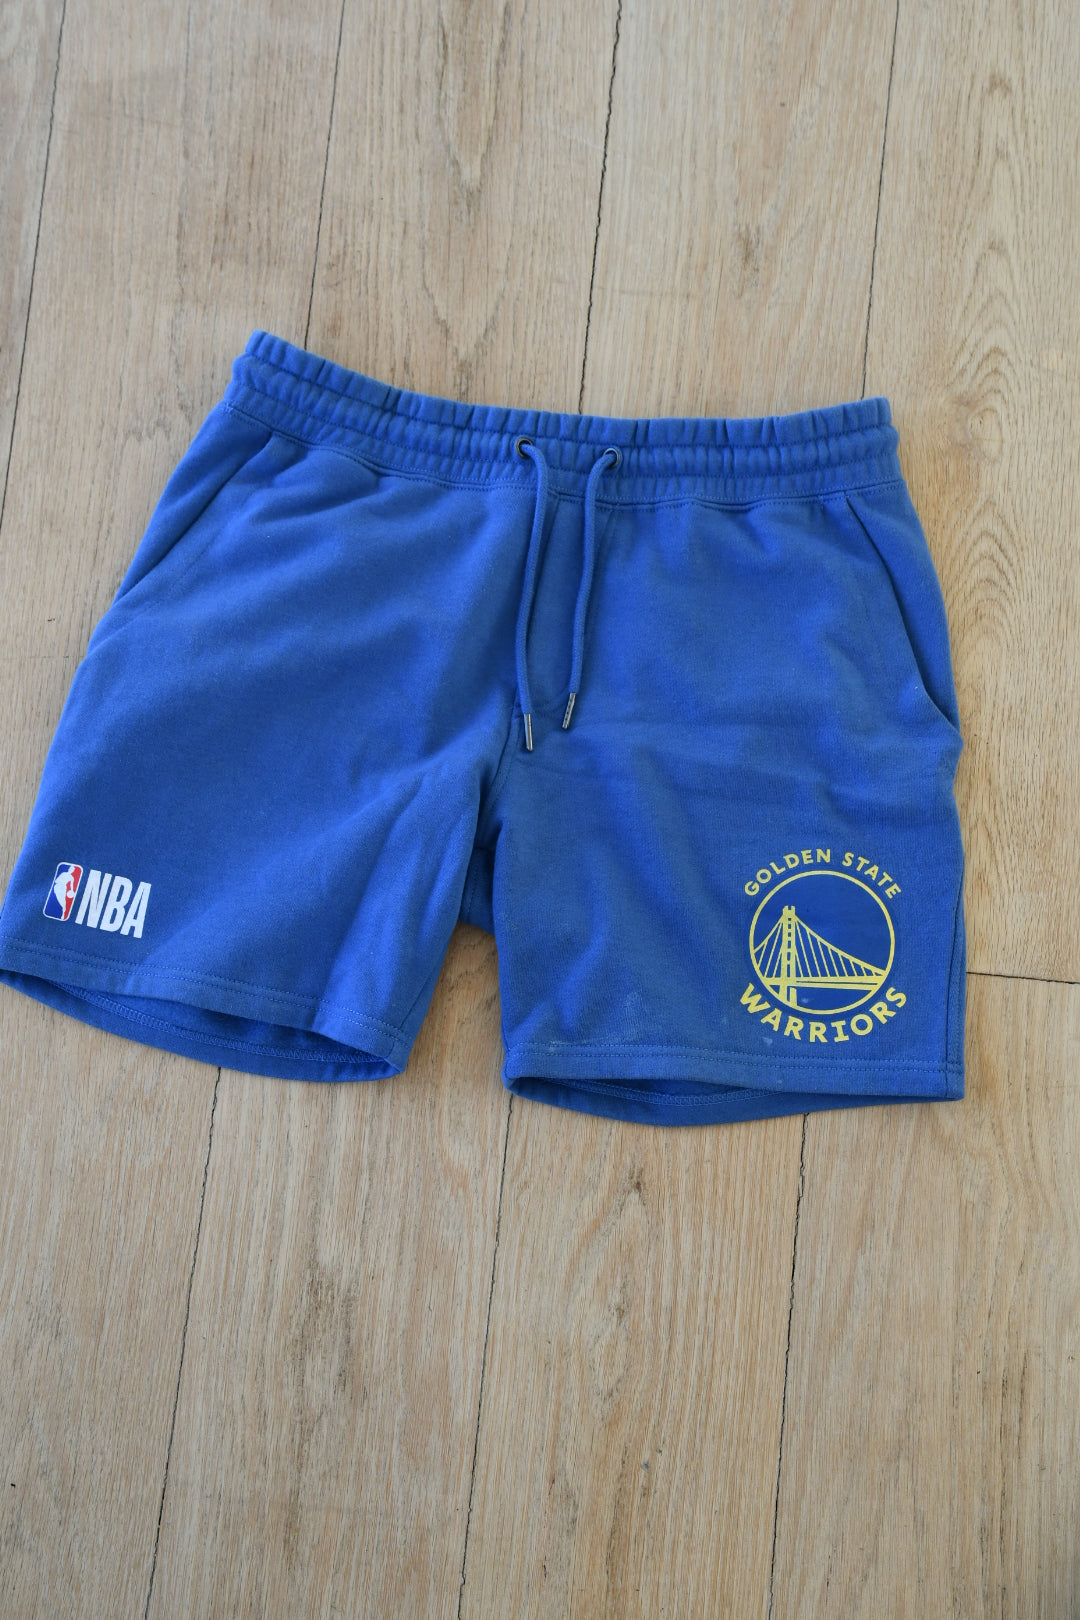 Image of NBA Golden Gate worriers shorts